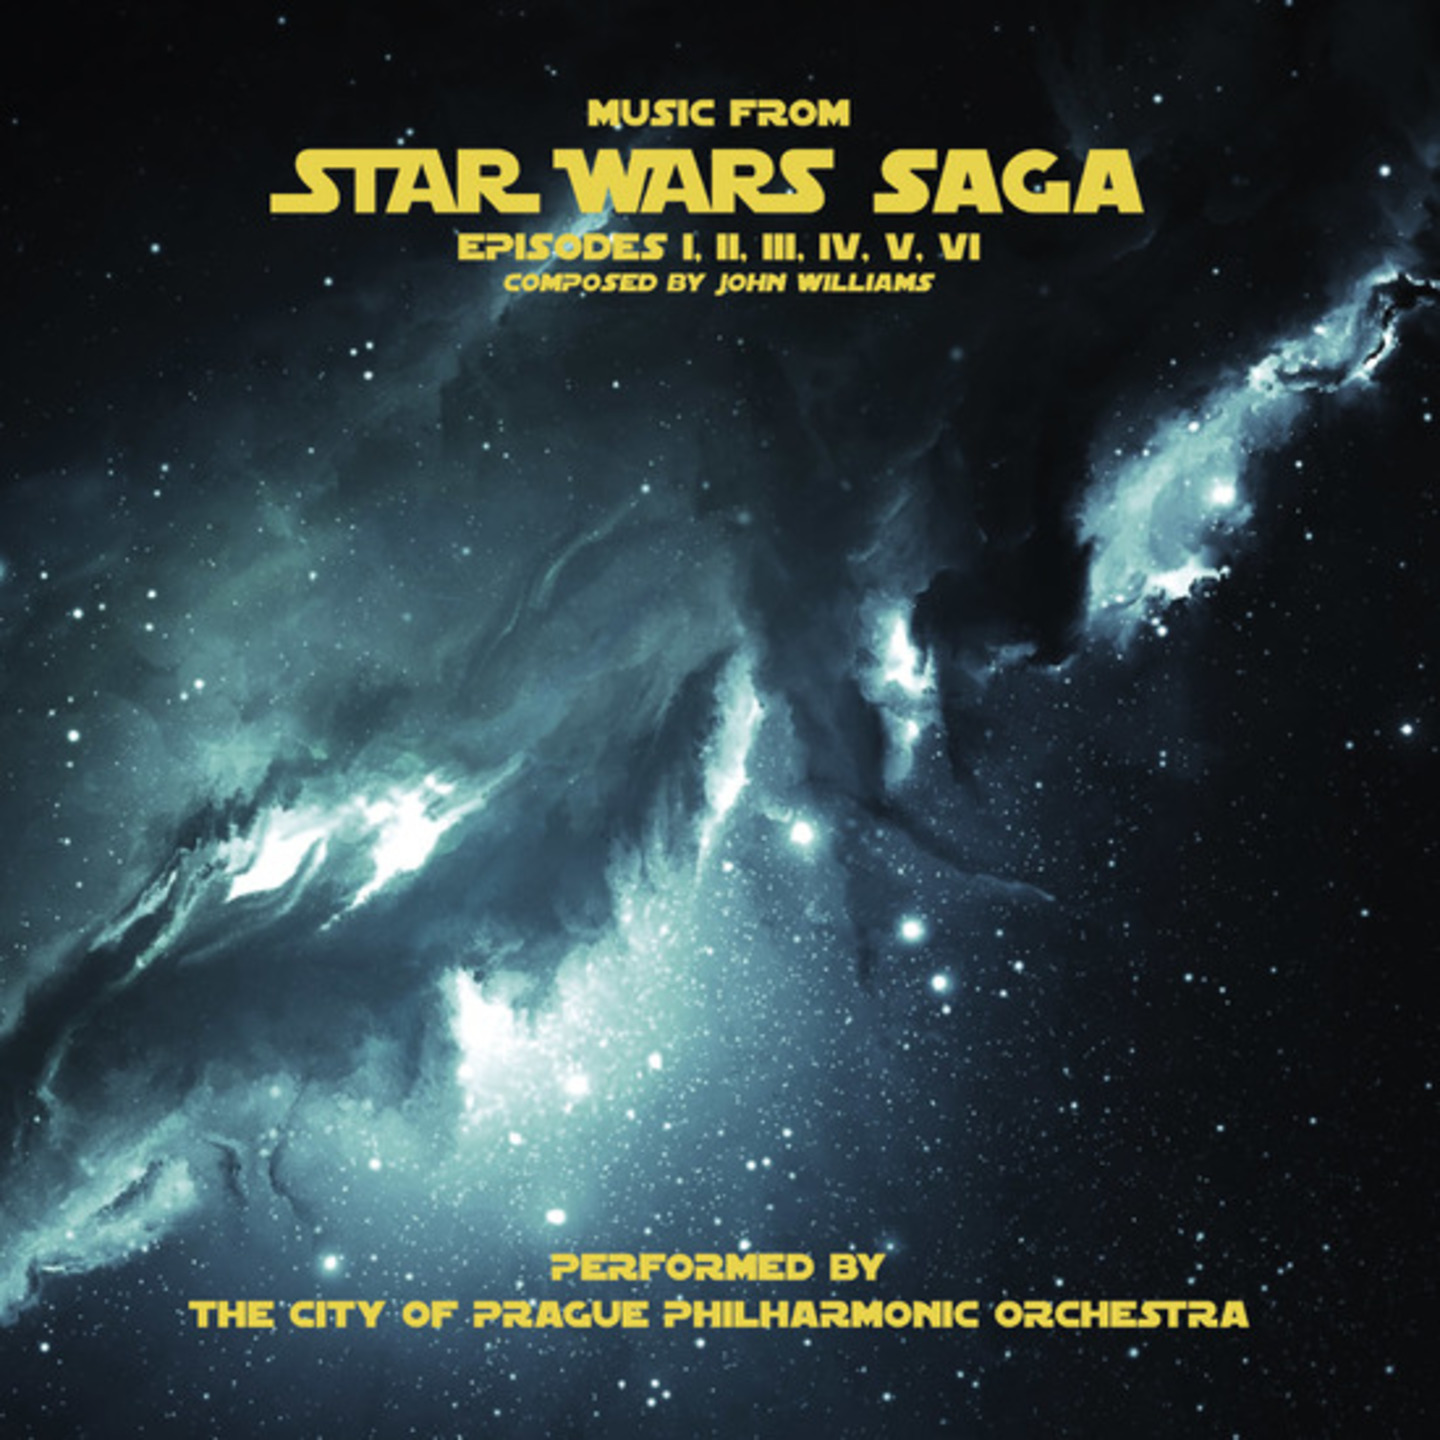 CITY OF PRAGUE PHILHARMONIC ORCHESTRA, THE - Music From Star Wars Saga: Episodes I - VI 2xLP  (Grey Vinyl)